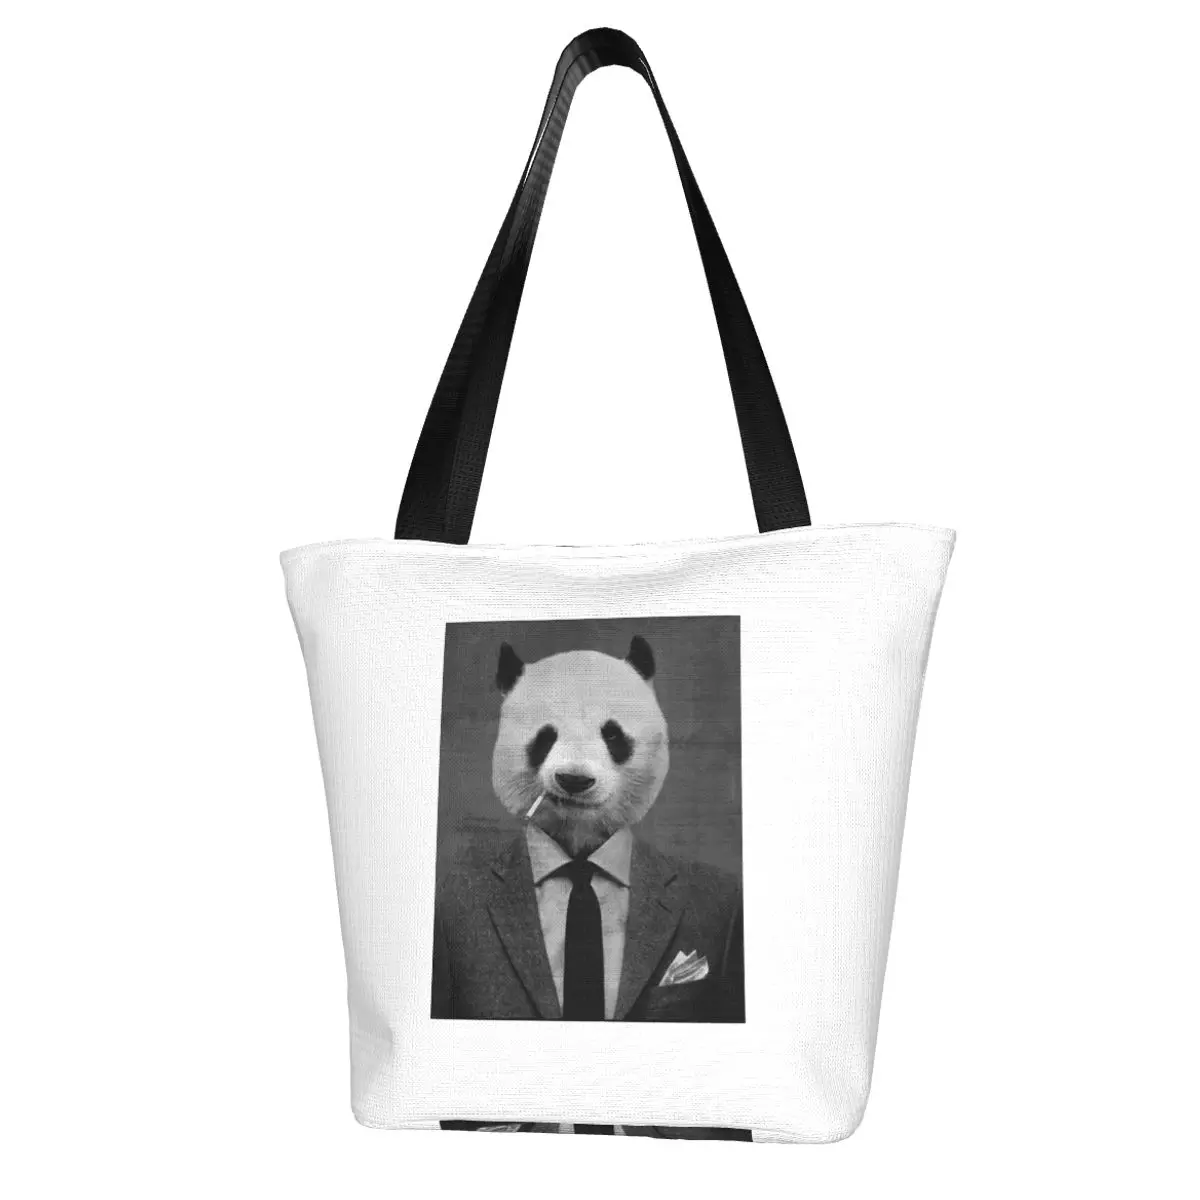 Dandy Panda Shopping Bag Aesthetic Cloth Outdoor Handbag Female Fashion Bags